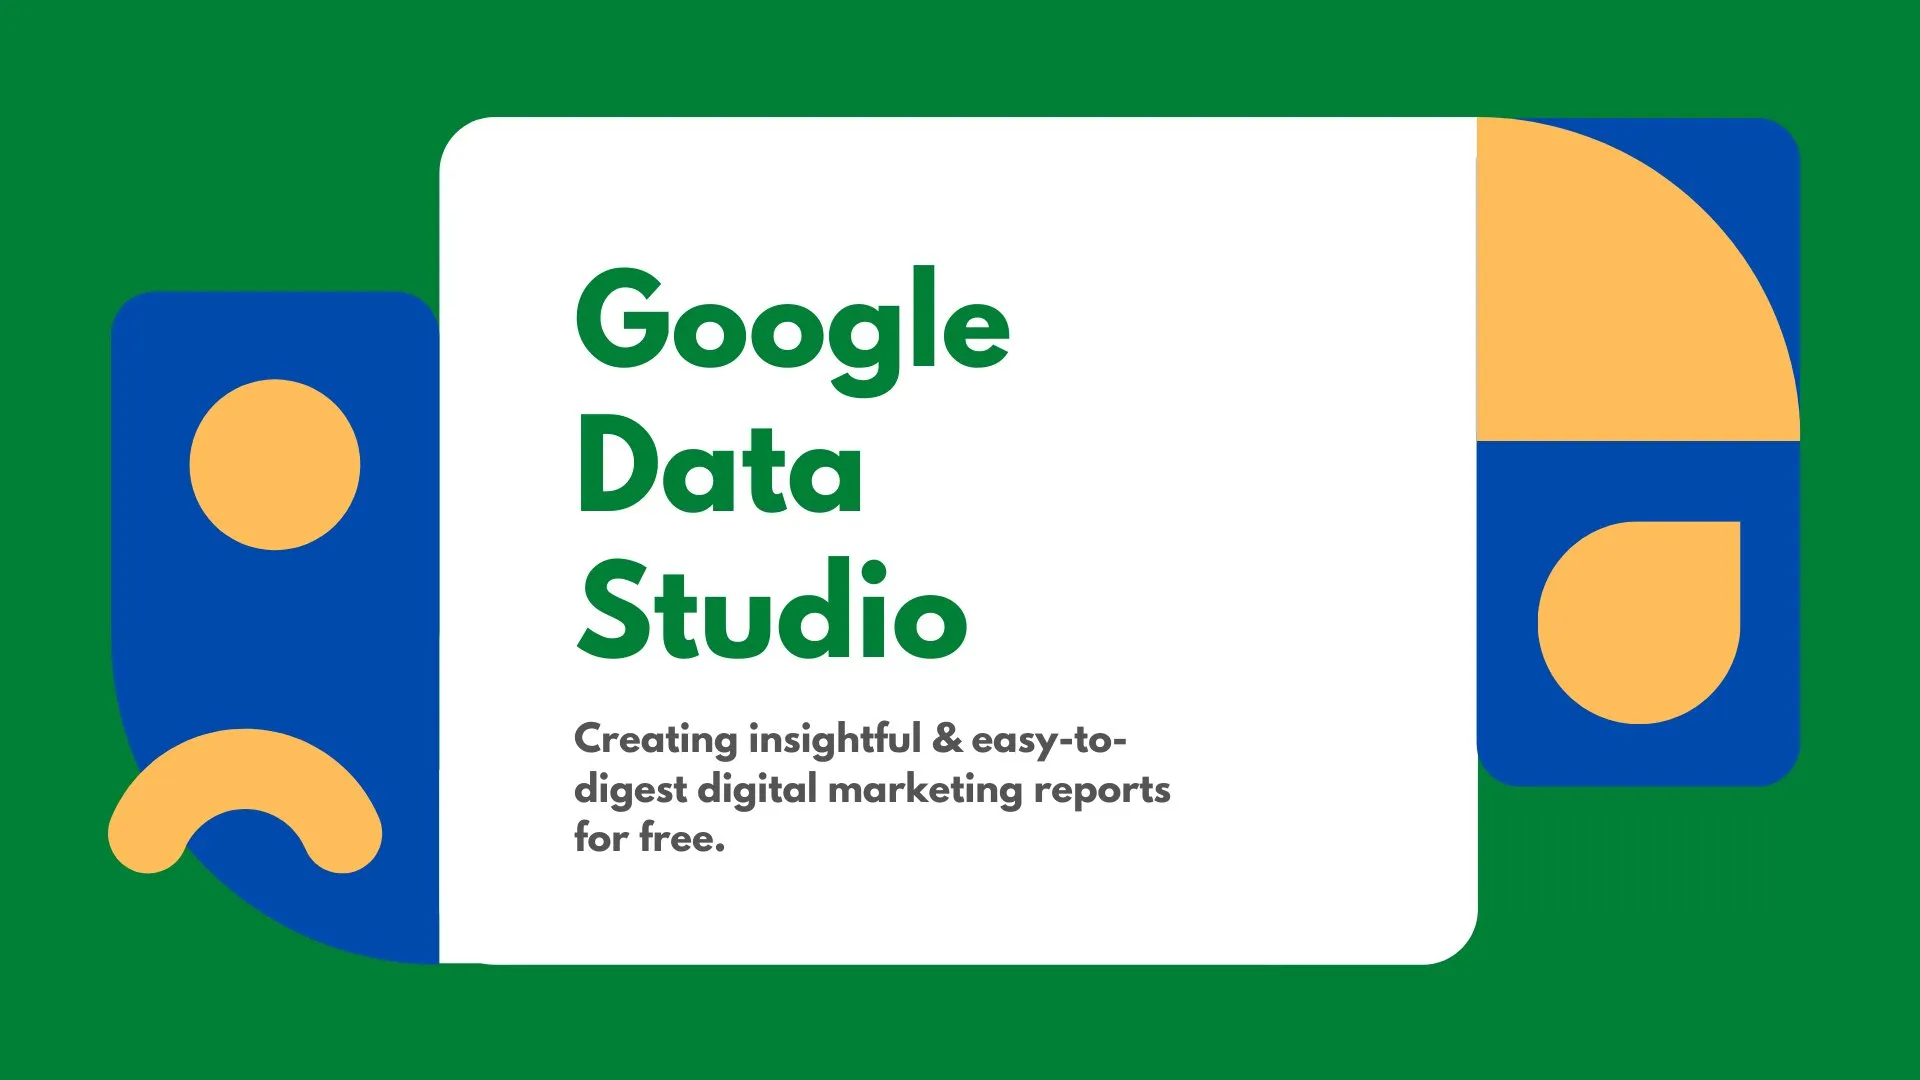 Google Data Studio - Build Beautiful Digital Marketing Reports For Free